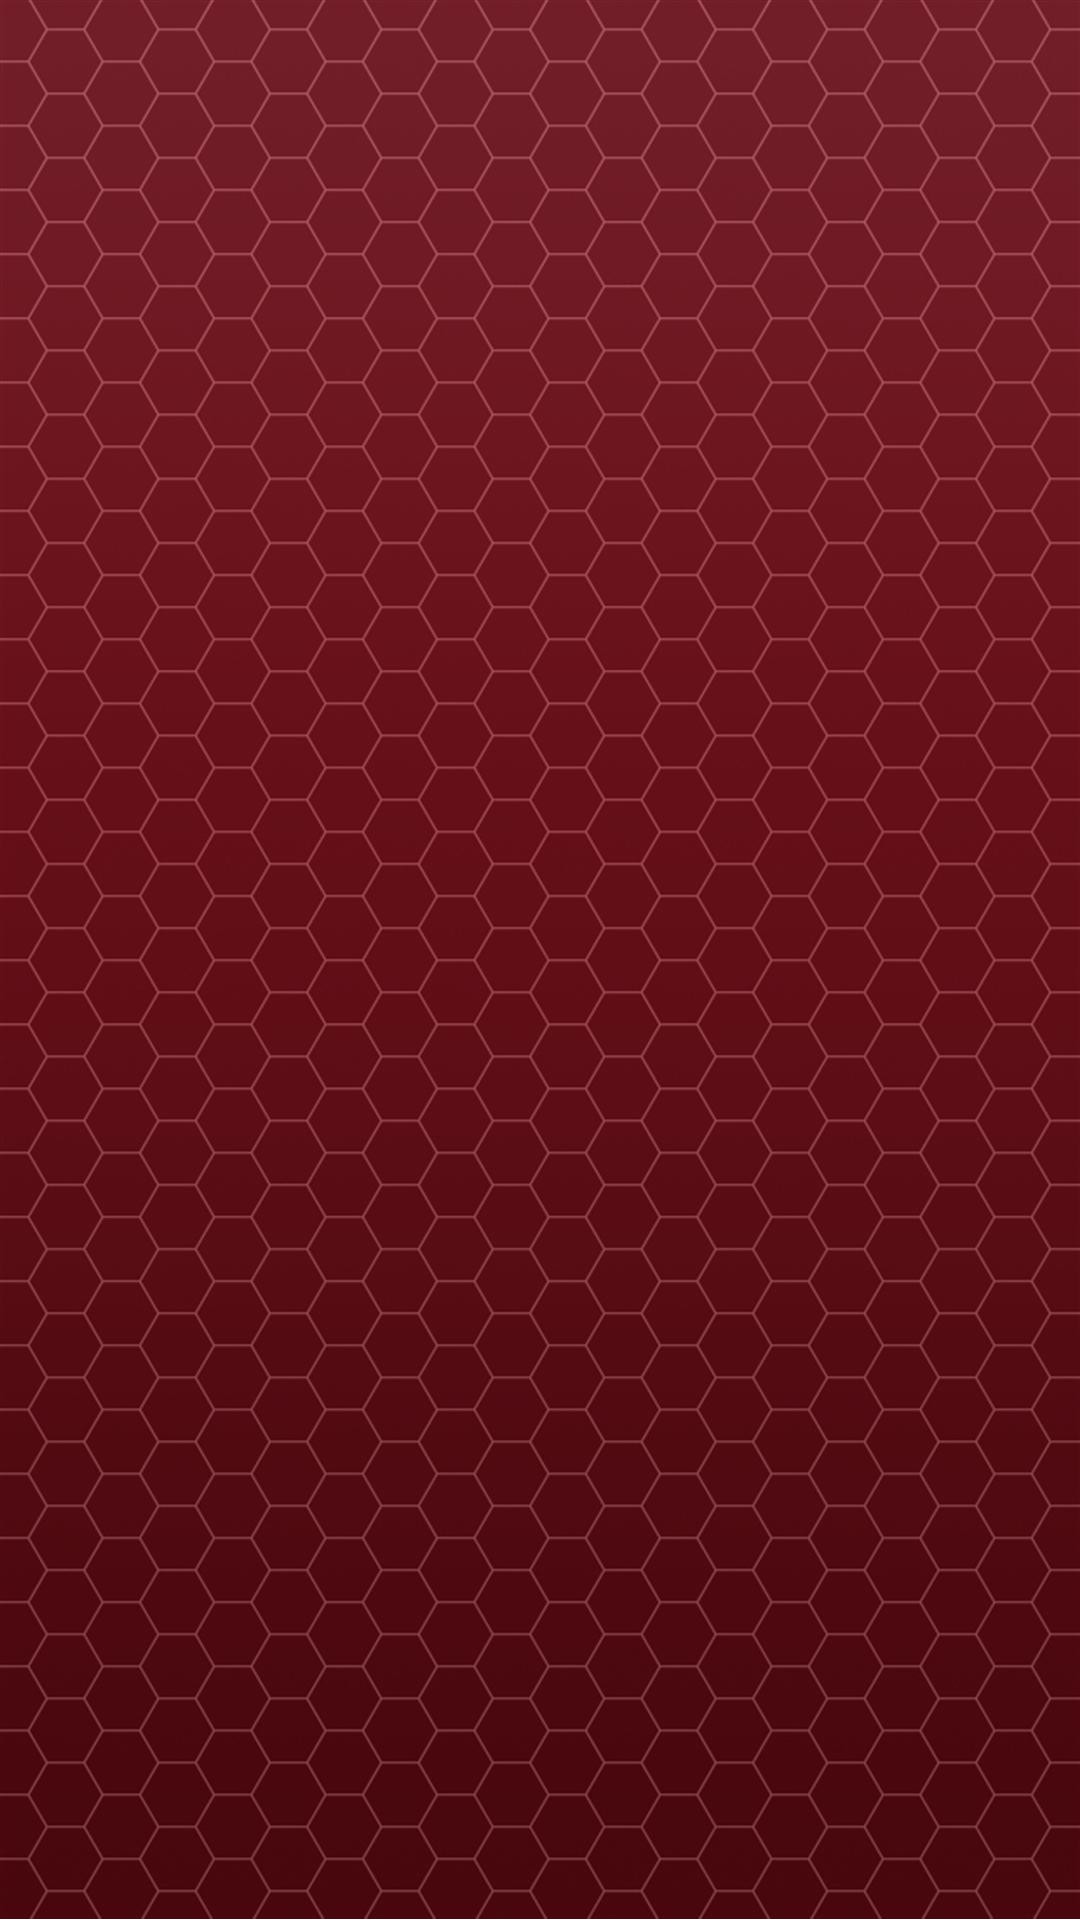 Honeycomb Wallpaper Repeated Black Interlocking Polygons Stock Vector  (Royalty Free) 667567276 | Shutterstock